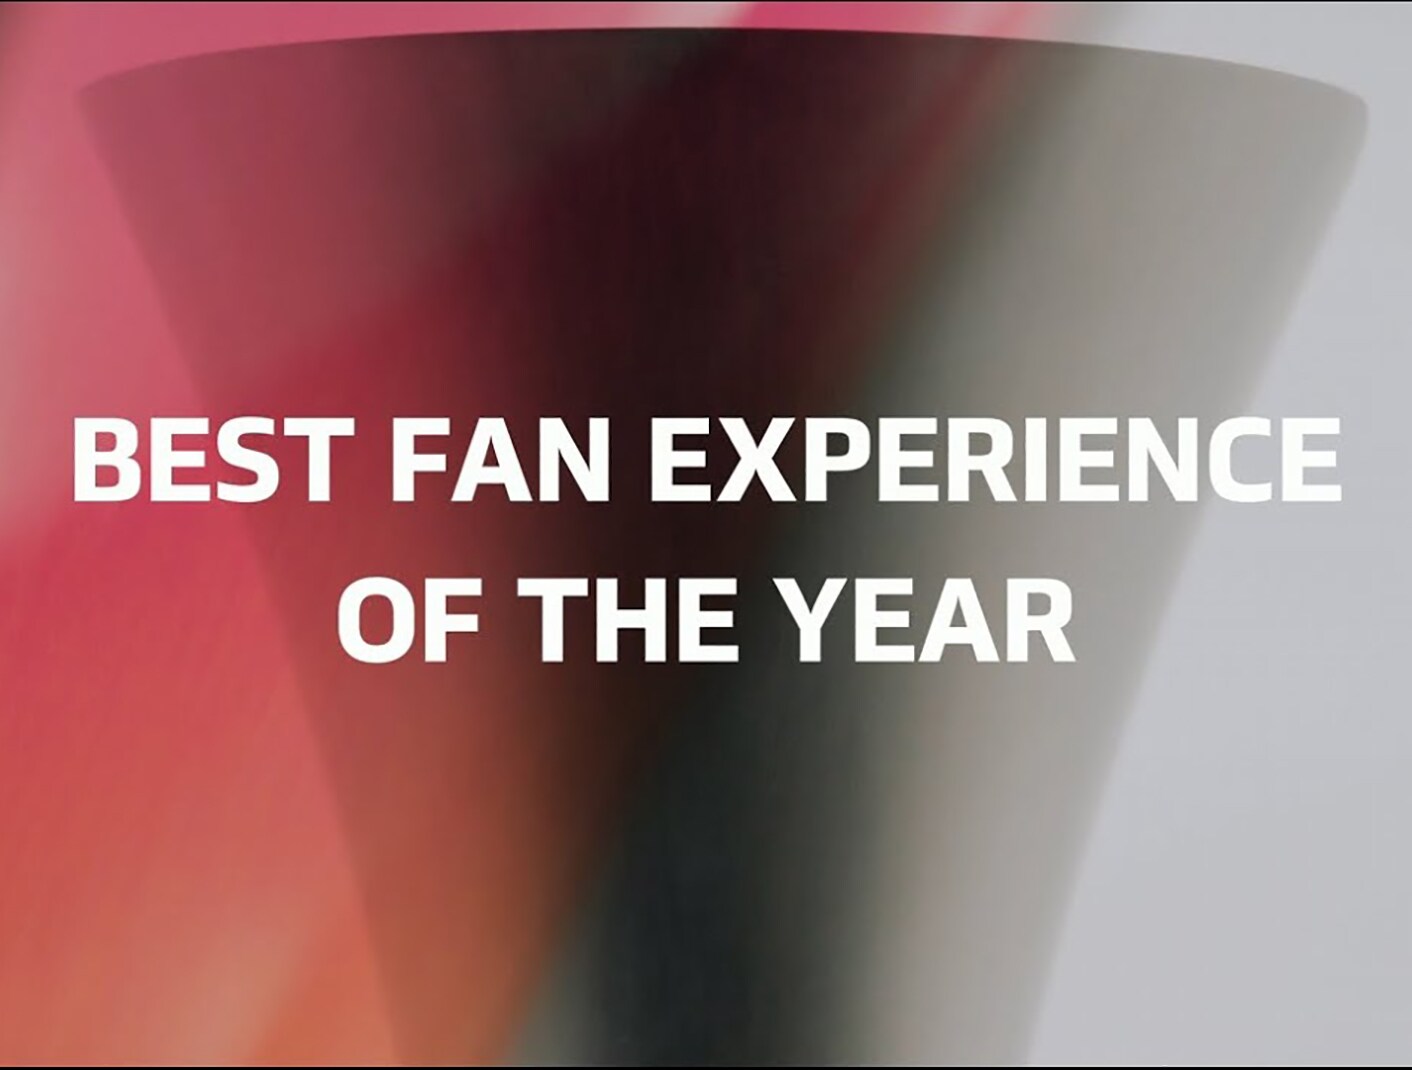 Hankook wins the Formula E Season 9 ‘Best Fan Experience of the Year’ award!